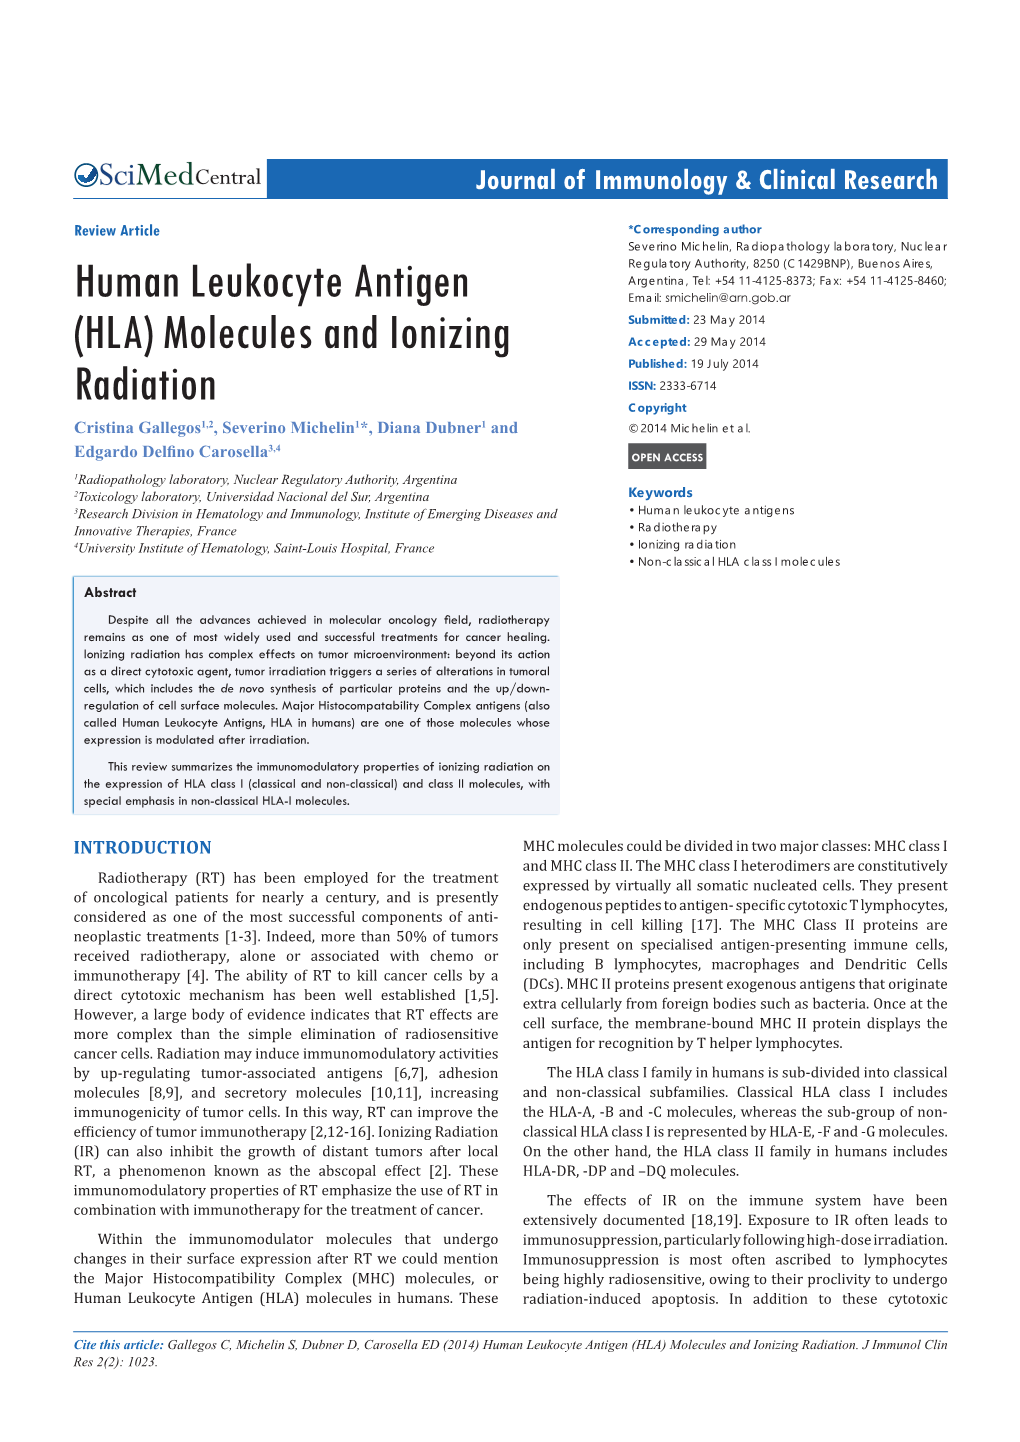 Human Leukocyte Antigen (HLA) Molecules and Ionizing Radiation